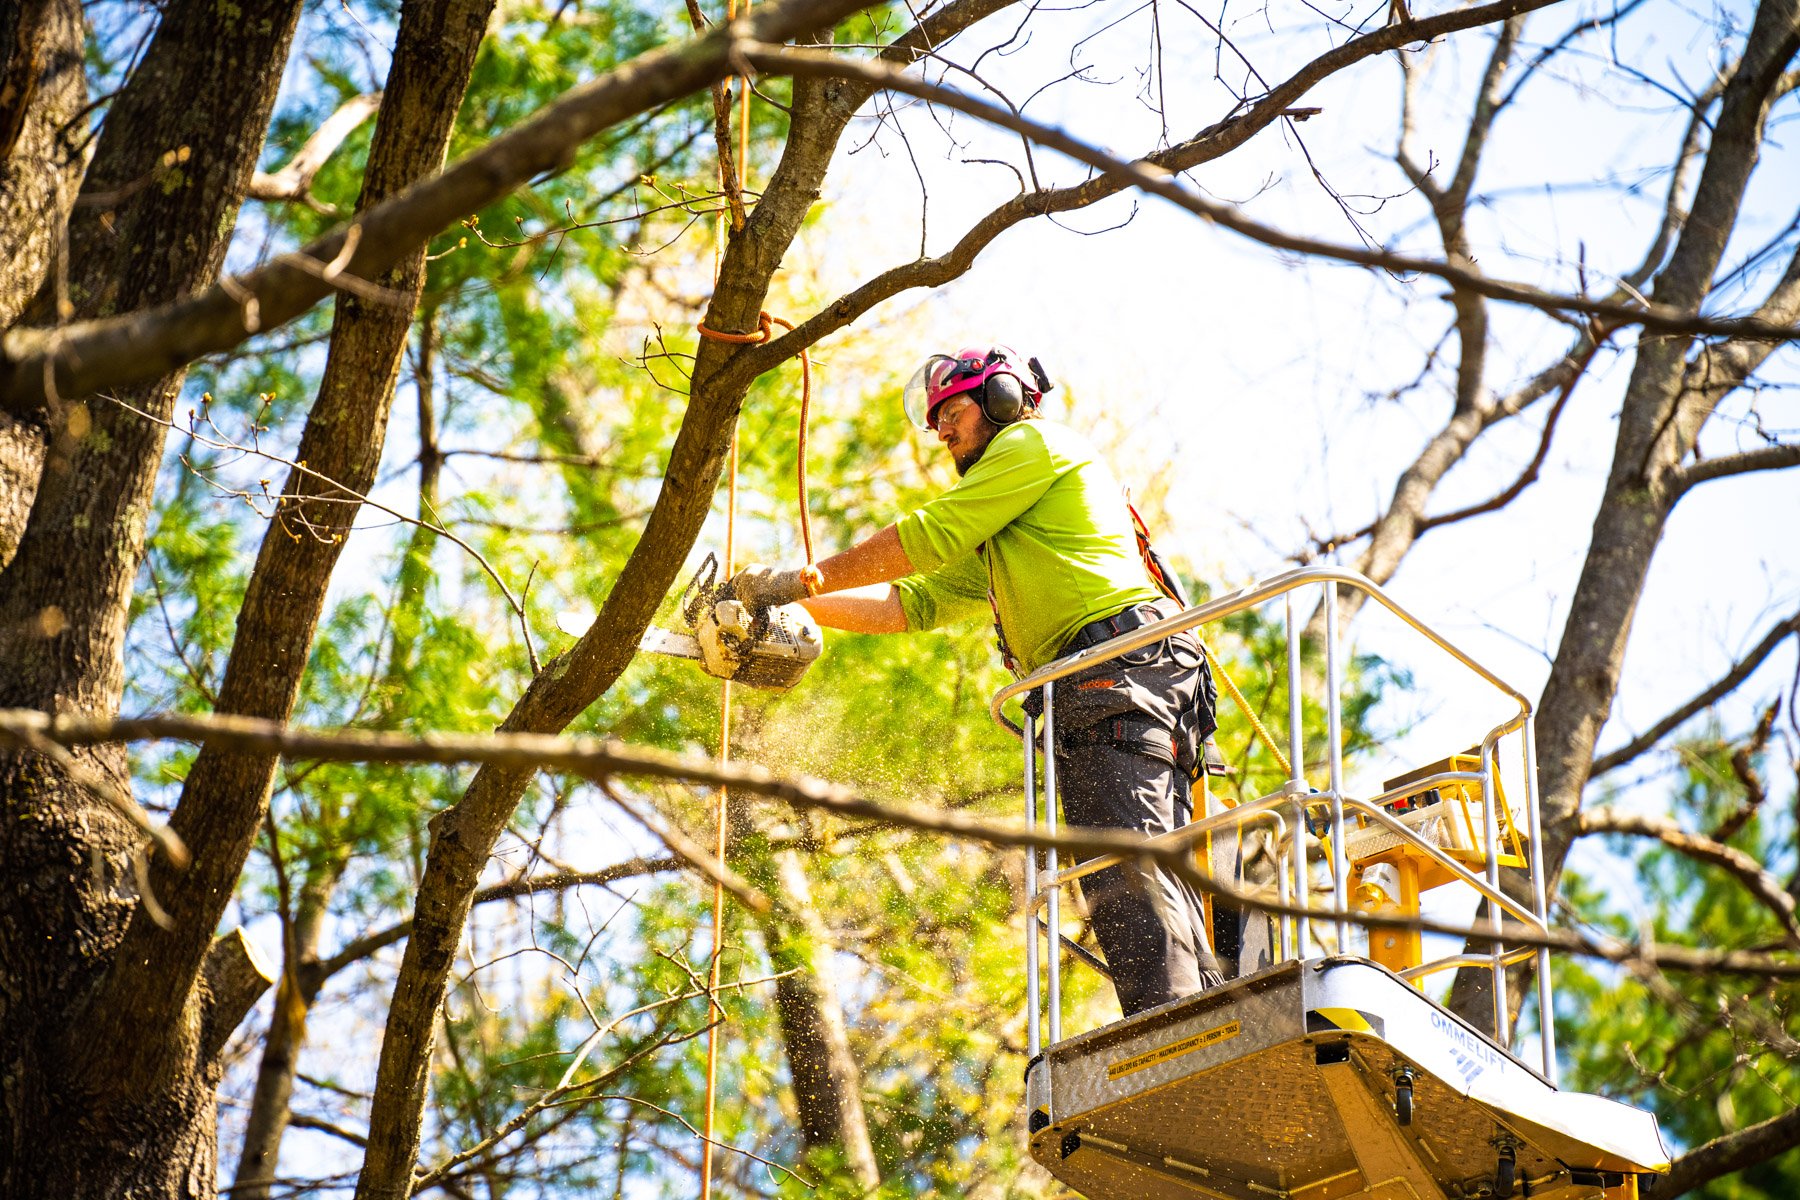 Arborist pruning a tree